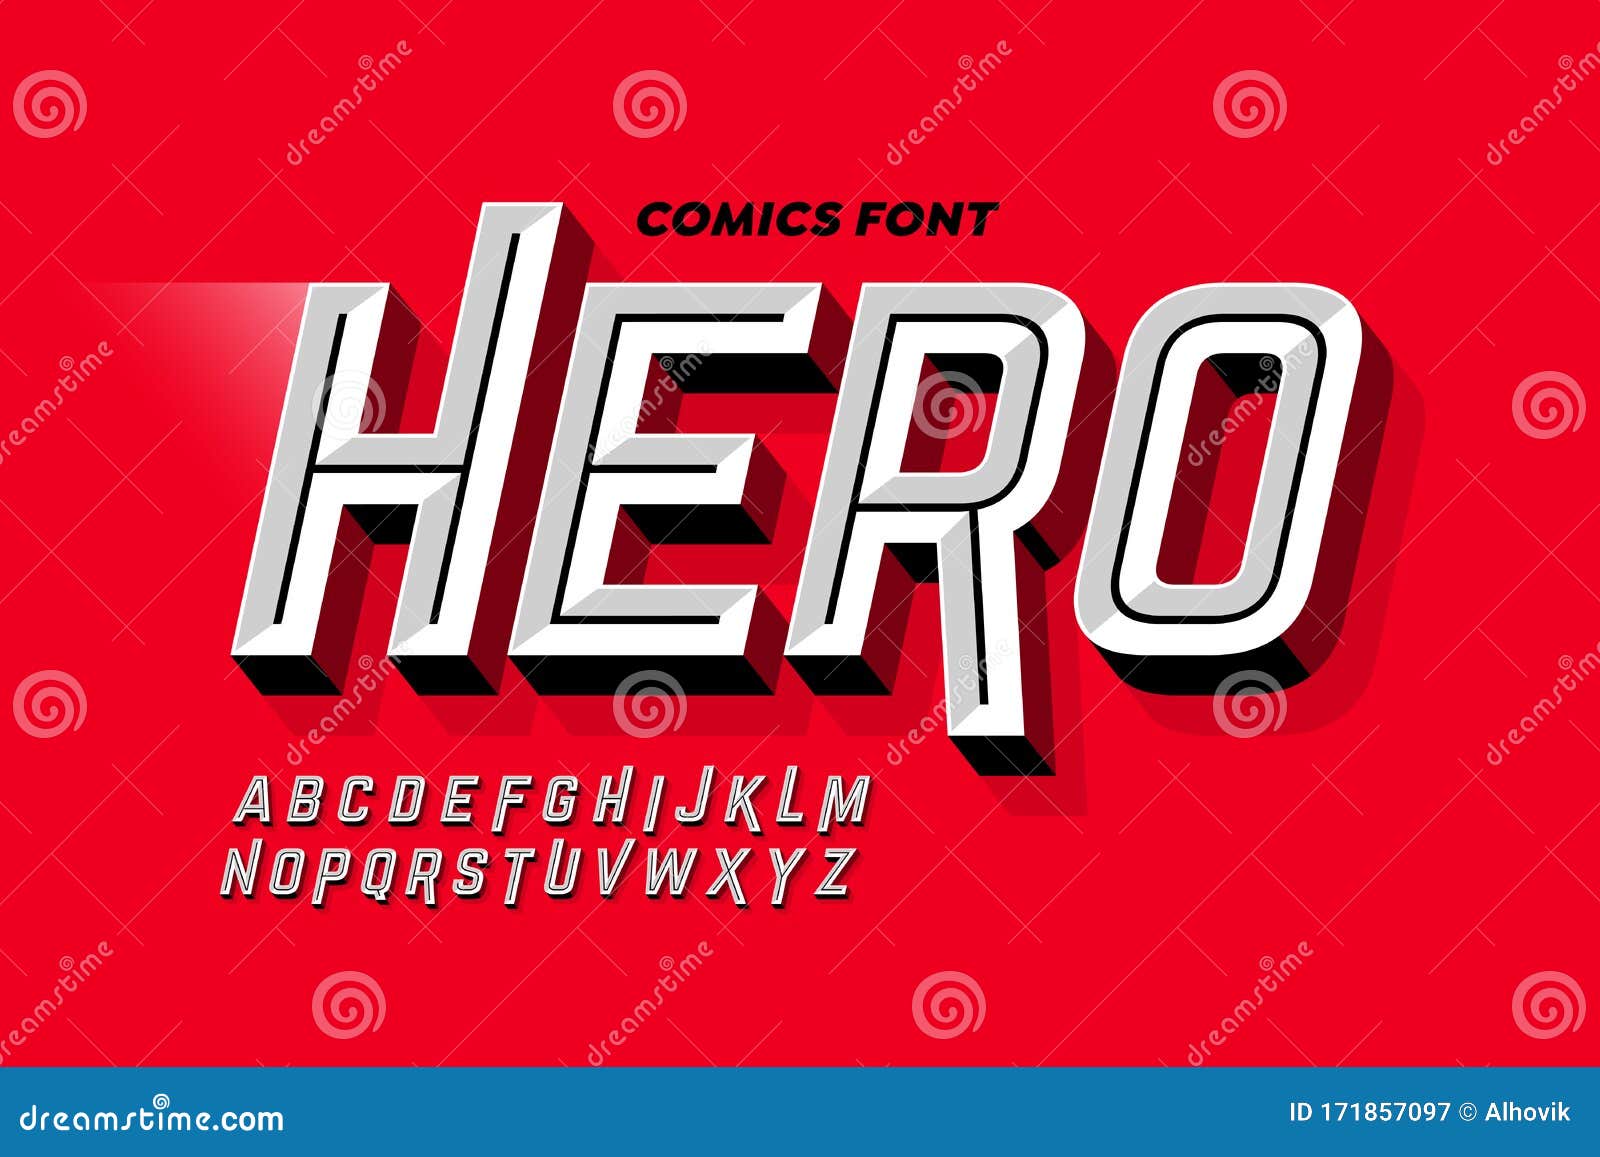 comics super hero style font